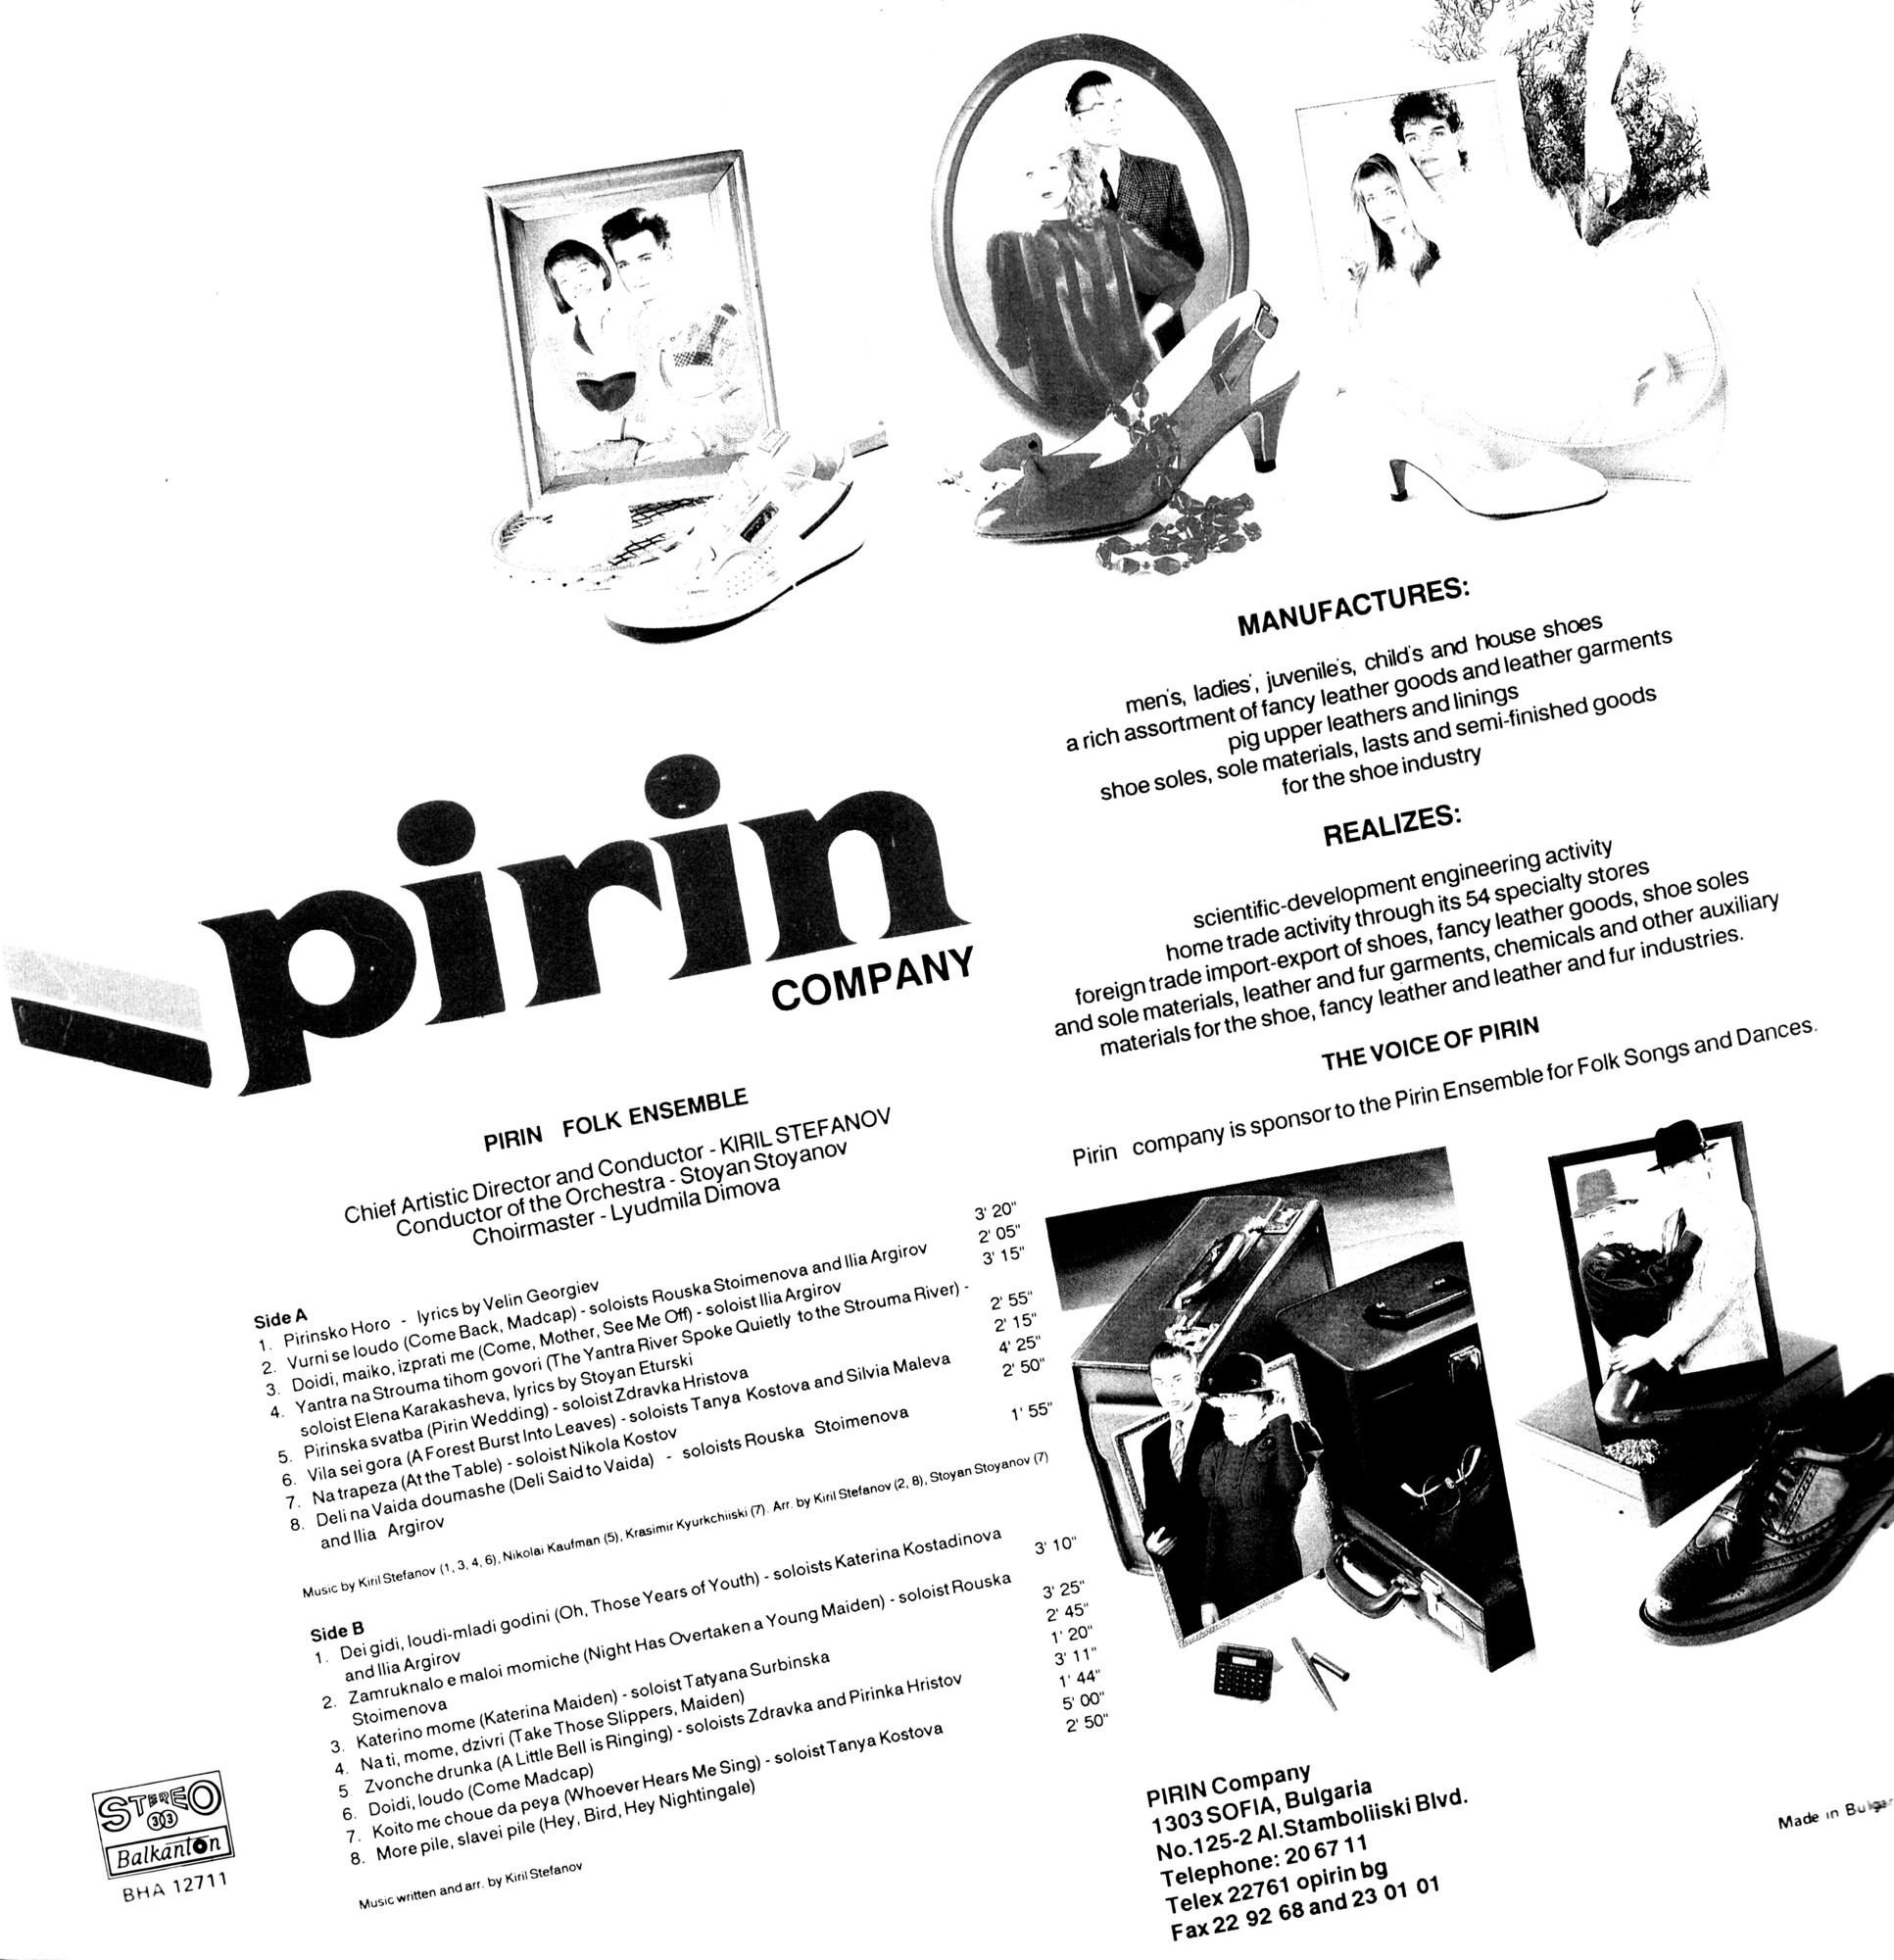 The Voice Of Pirin